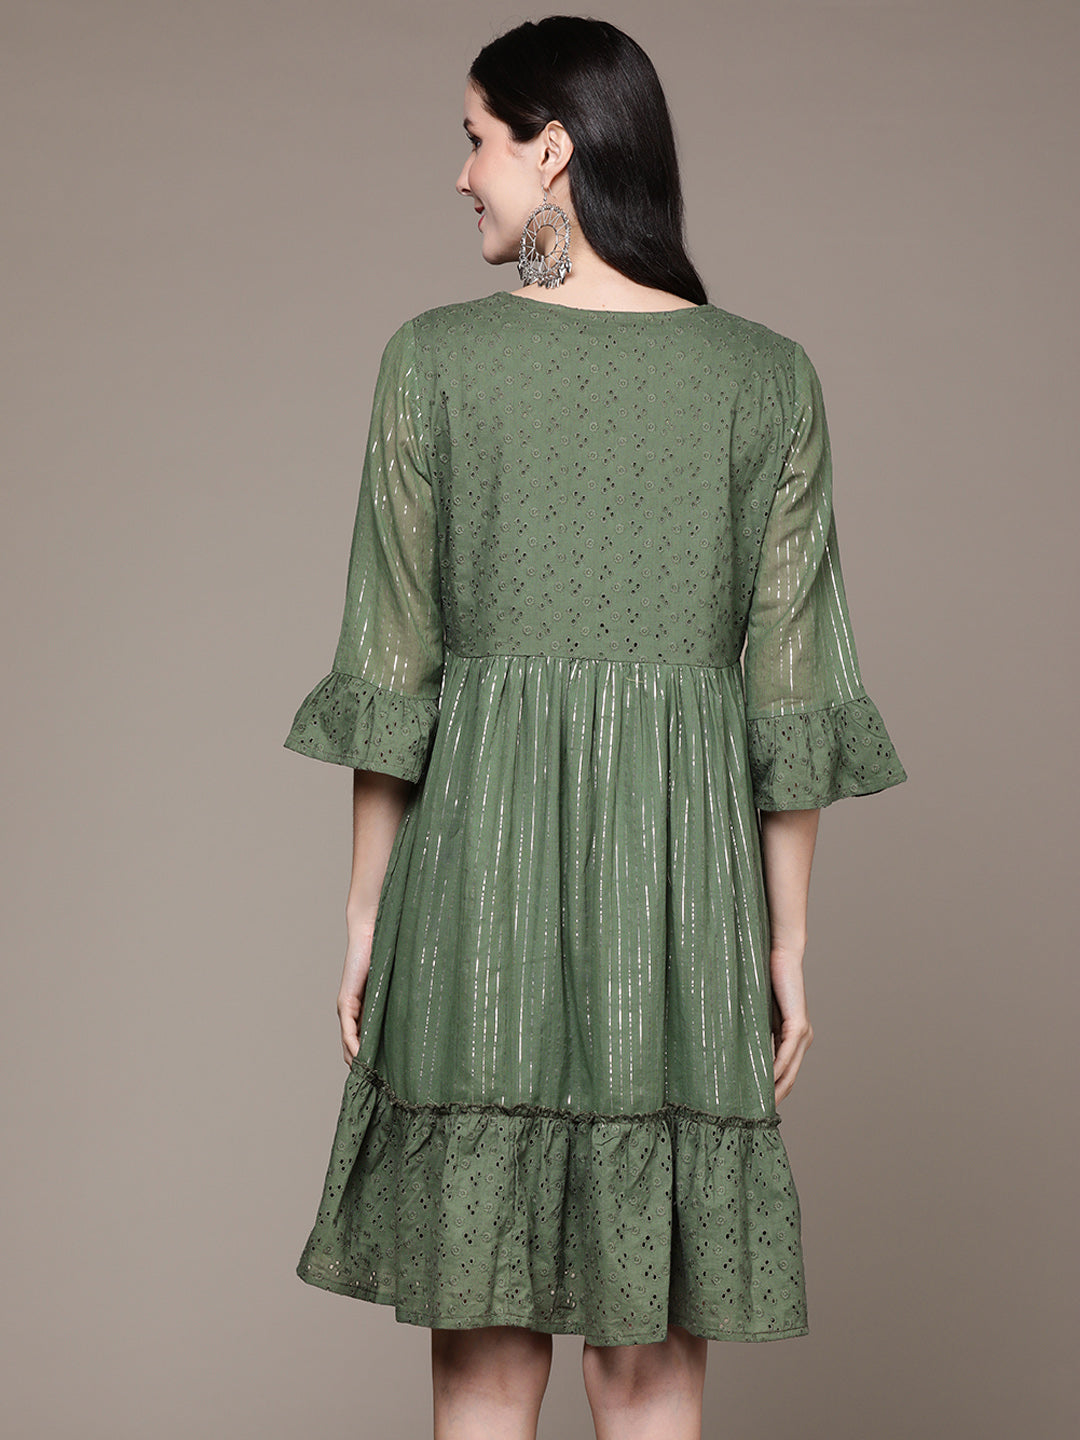 Ishin Women's Green Schiffli Embroidered Fit & Flare Dress